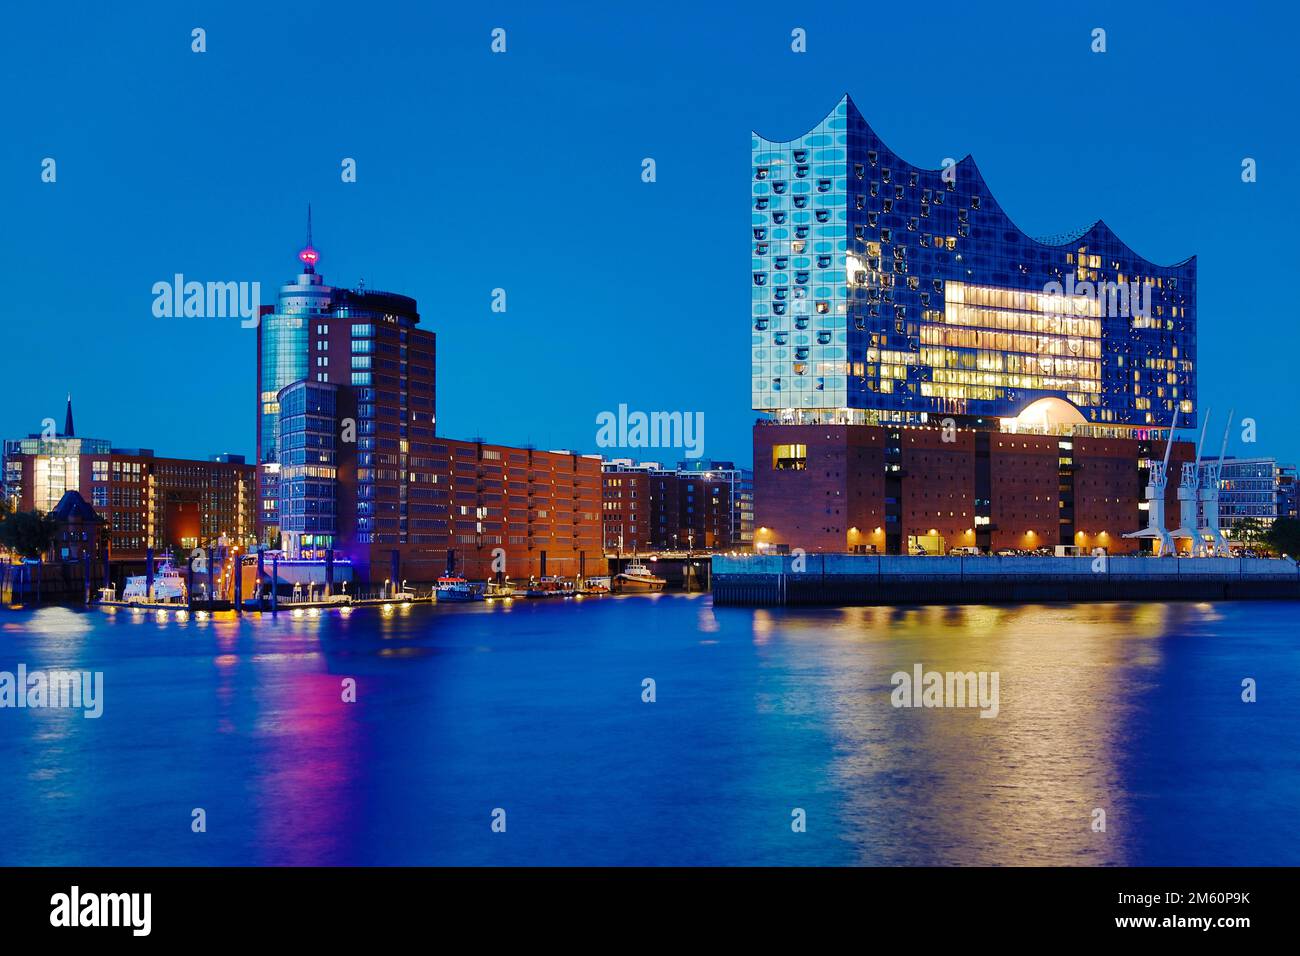 Elbe Philharmonic Hall and Columbus Haus in the evening, Hafencity, Hamburg, Germany Stock Photo